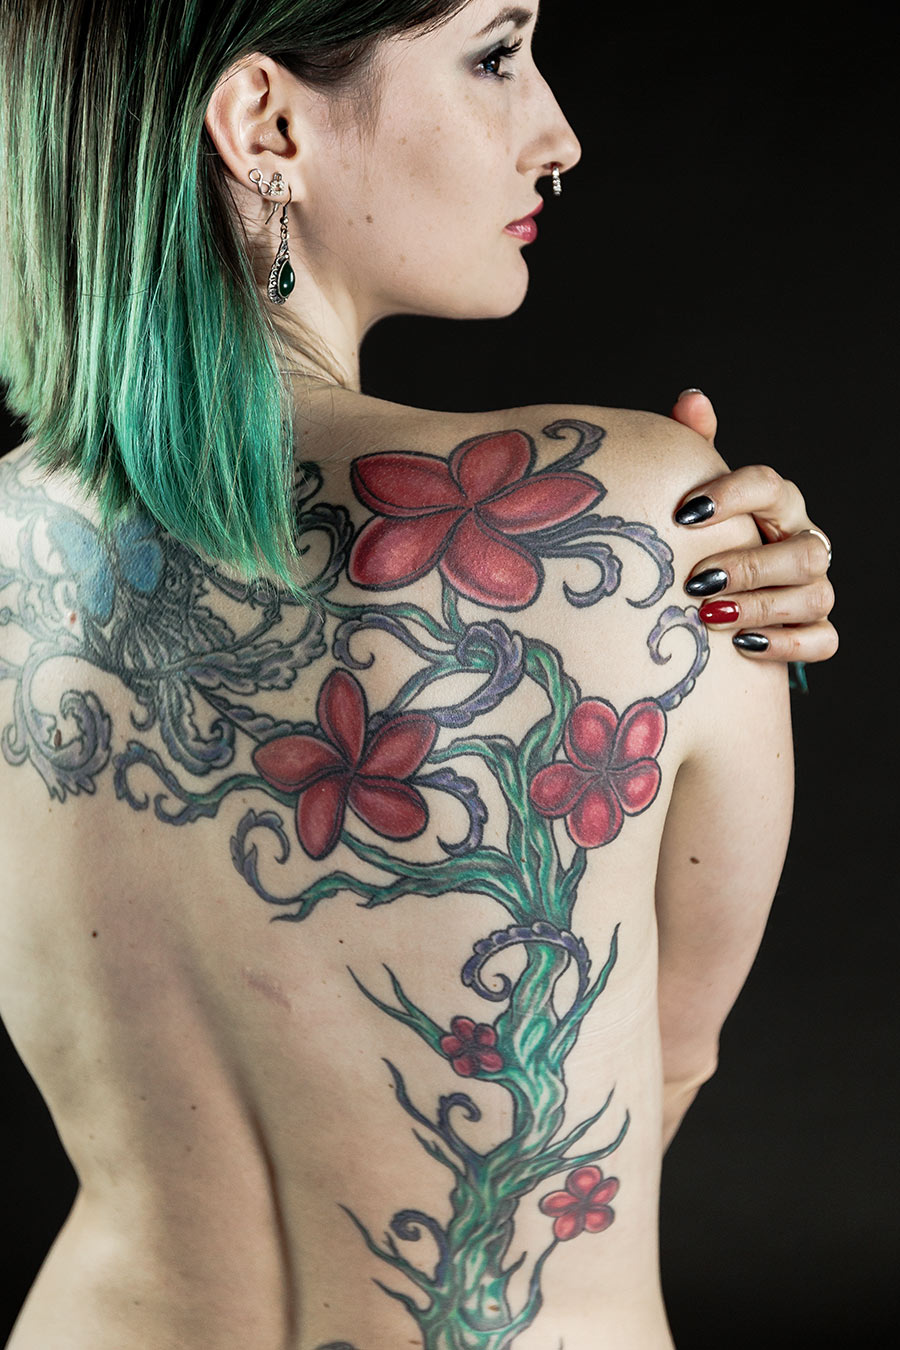 Grassi invites 4 Tattoo&Piercing – Antje fotografiert